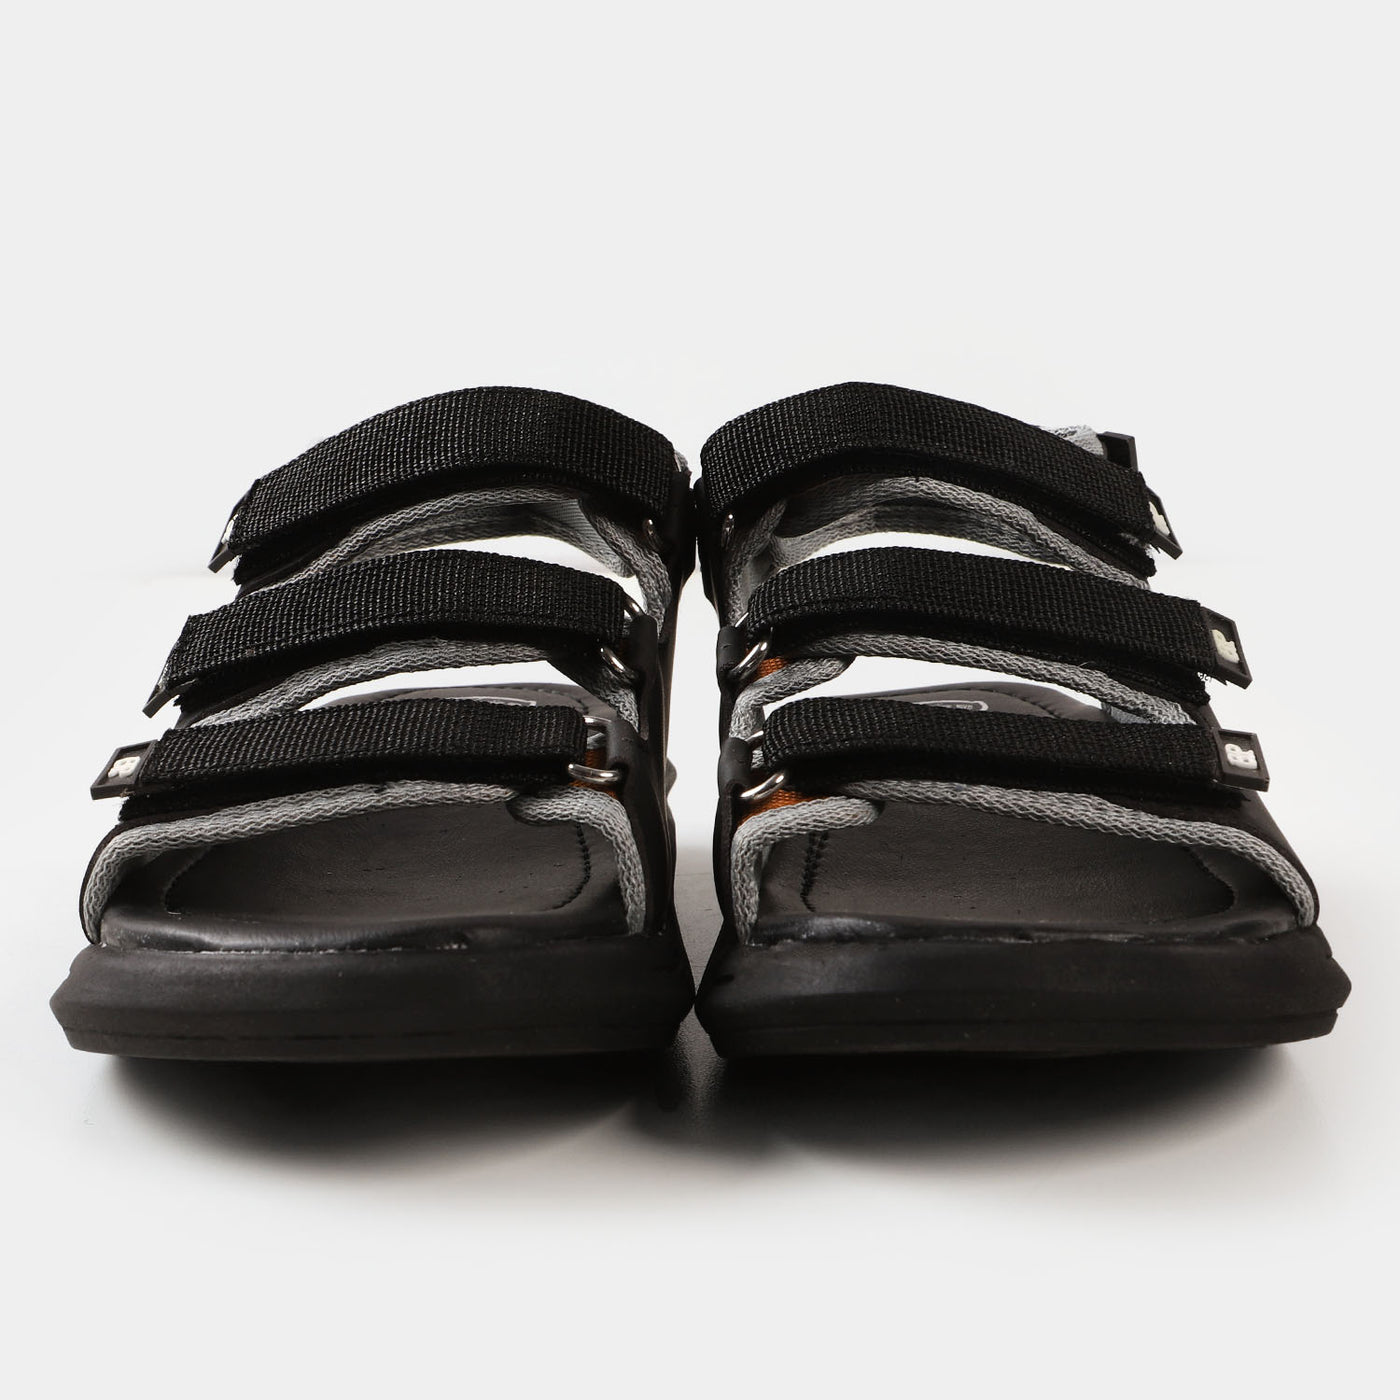 Boys Sandal SD 2556-4 - Black/Grey